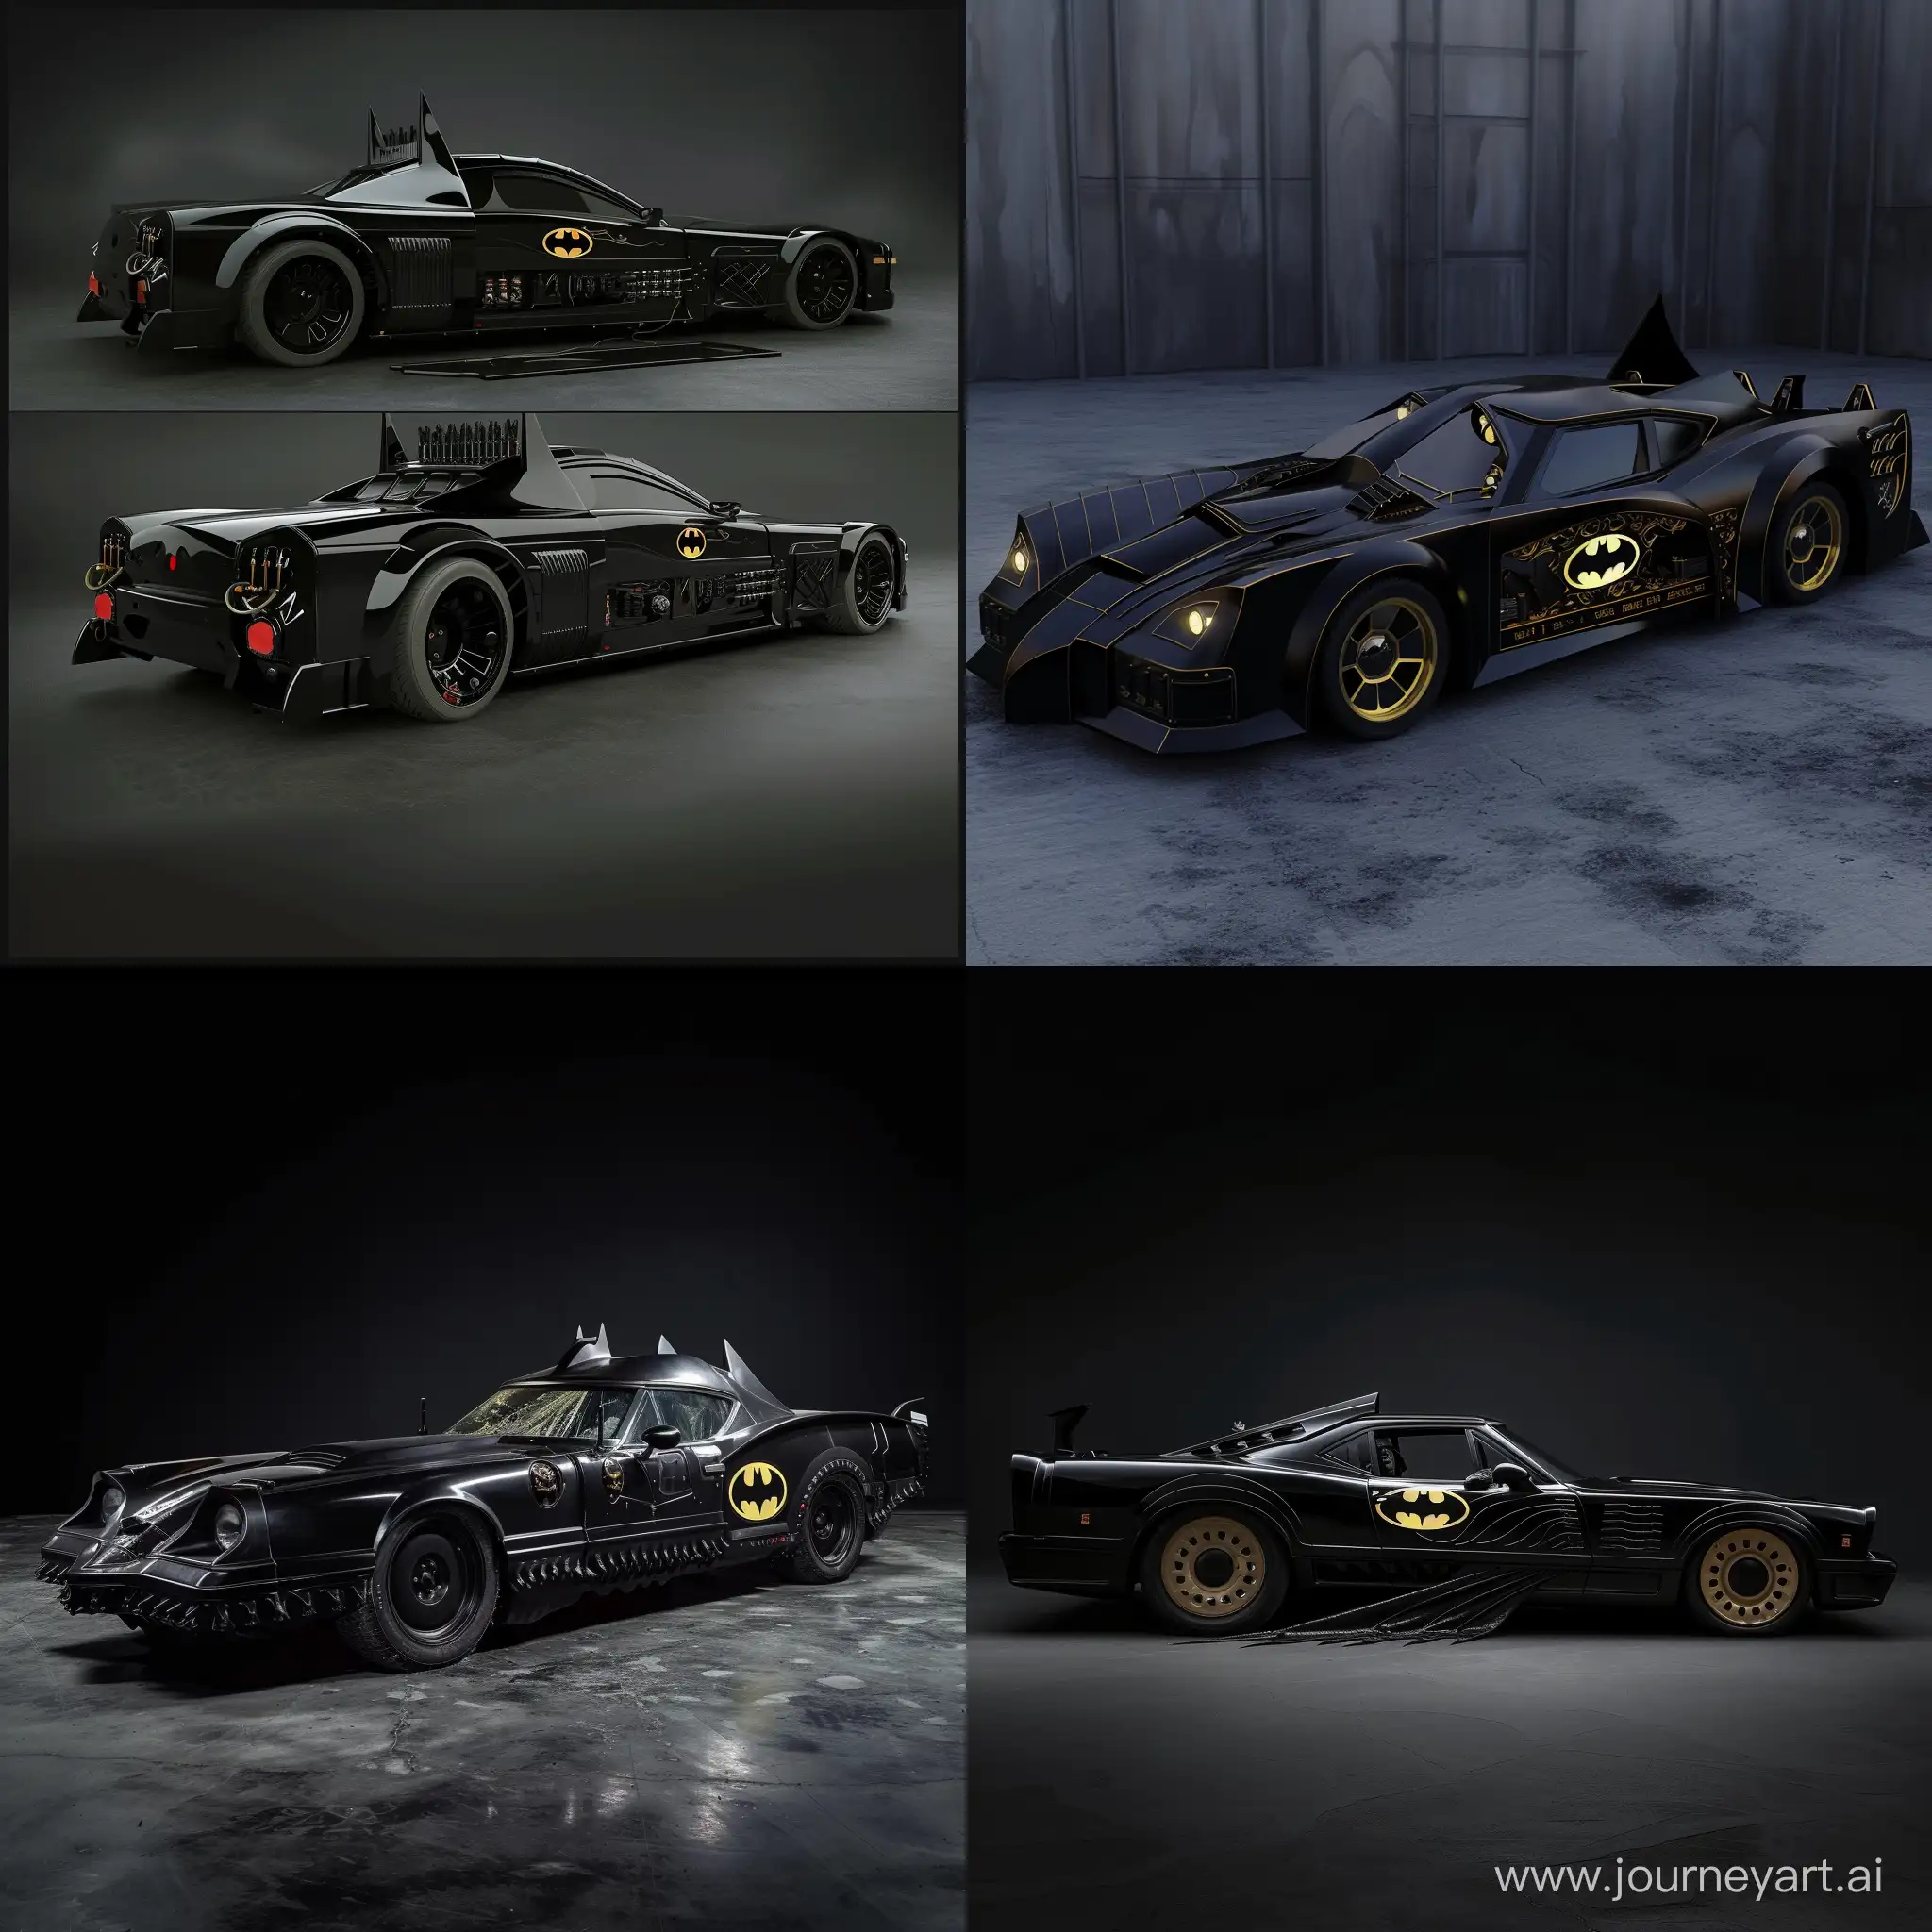 Make the Batman car like a mortuary car
